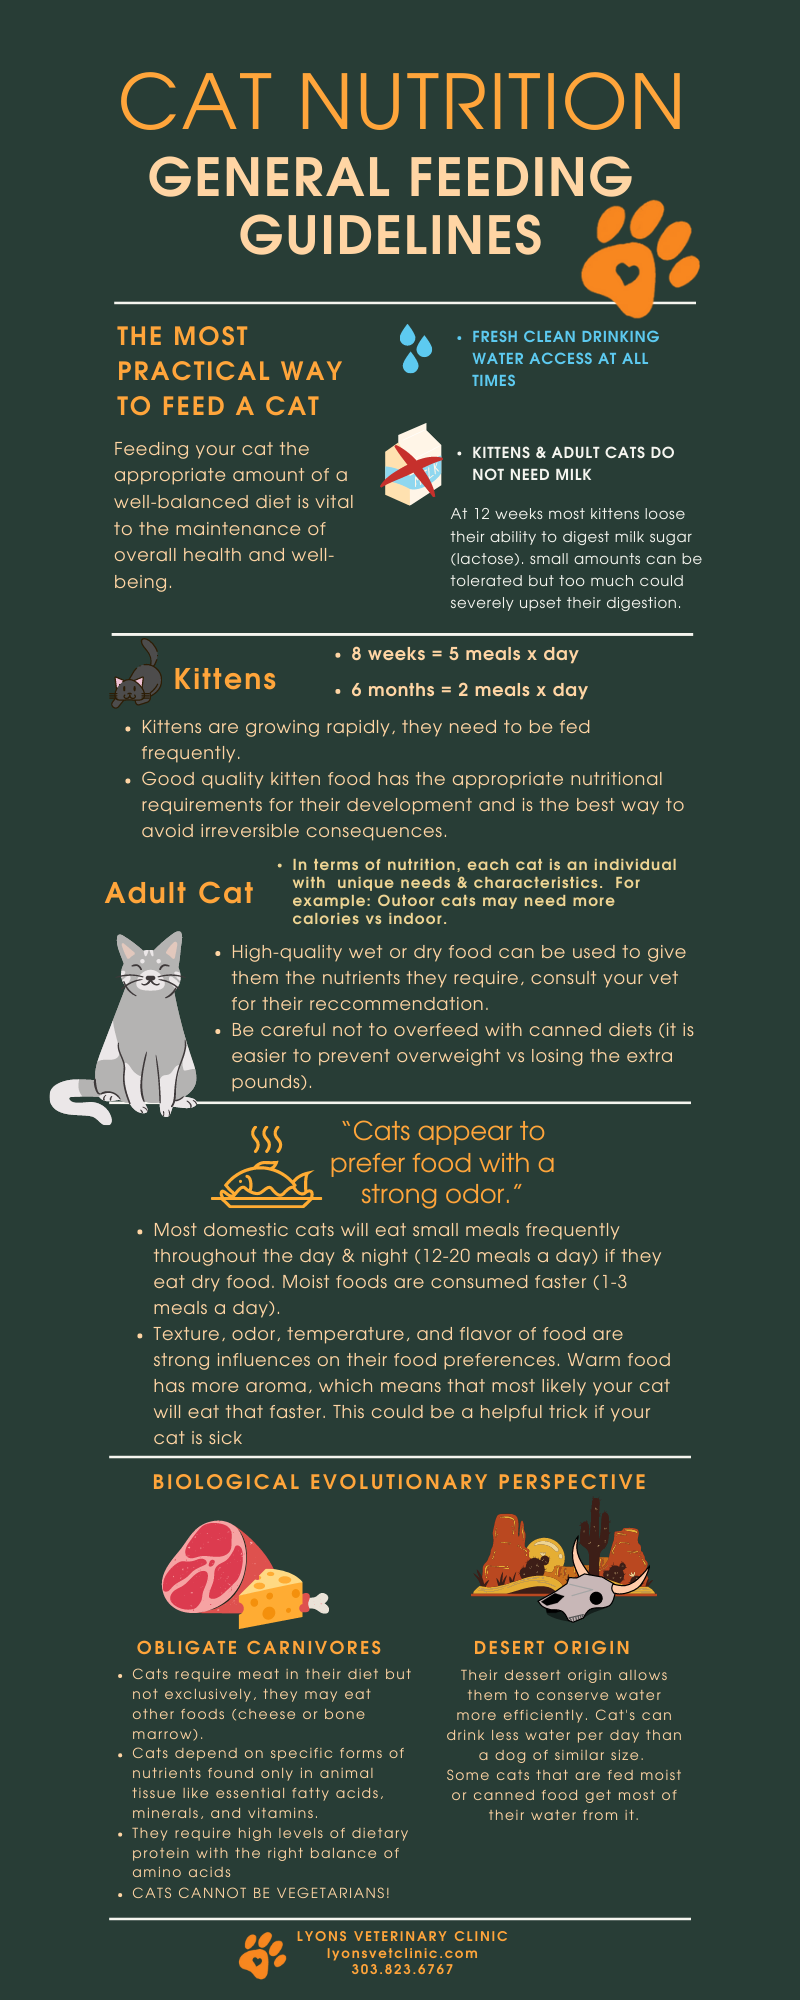 http://www.lyonsvetclinic.com/uploads/1/2/0/6/120606456/cat-nutrition-infographic_orig.png